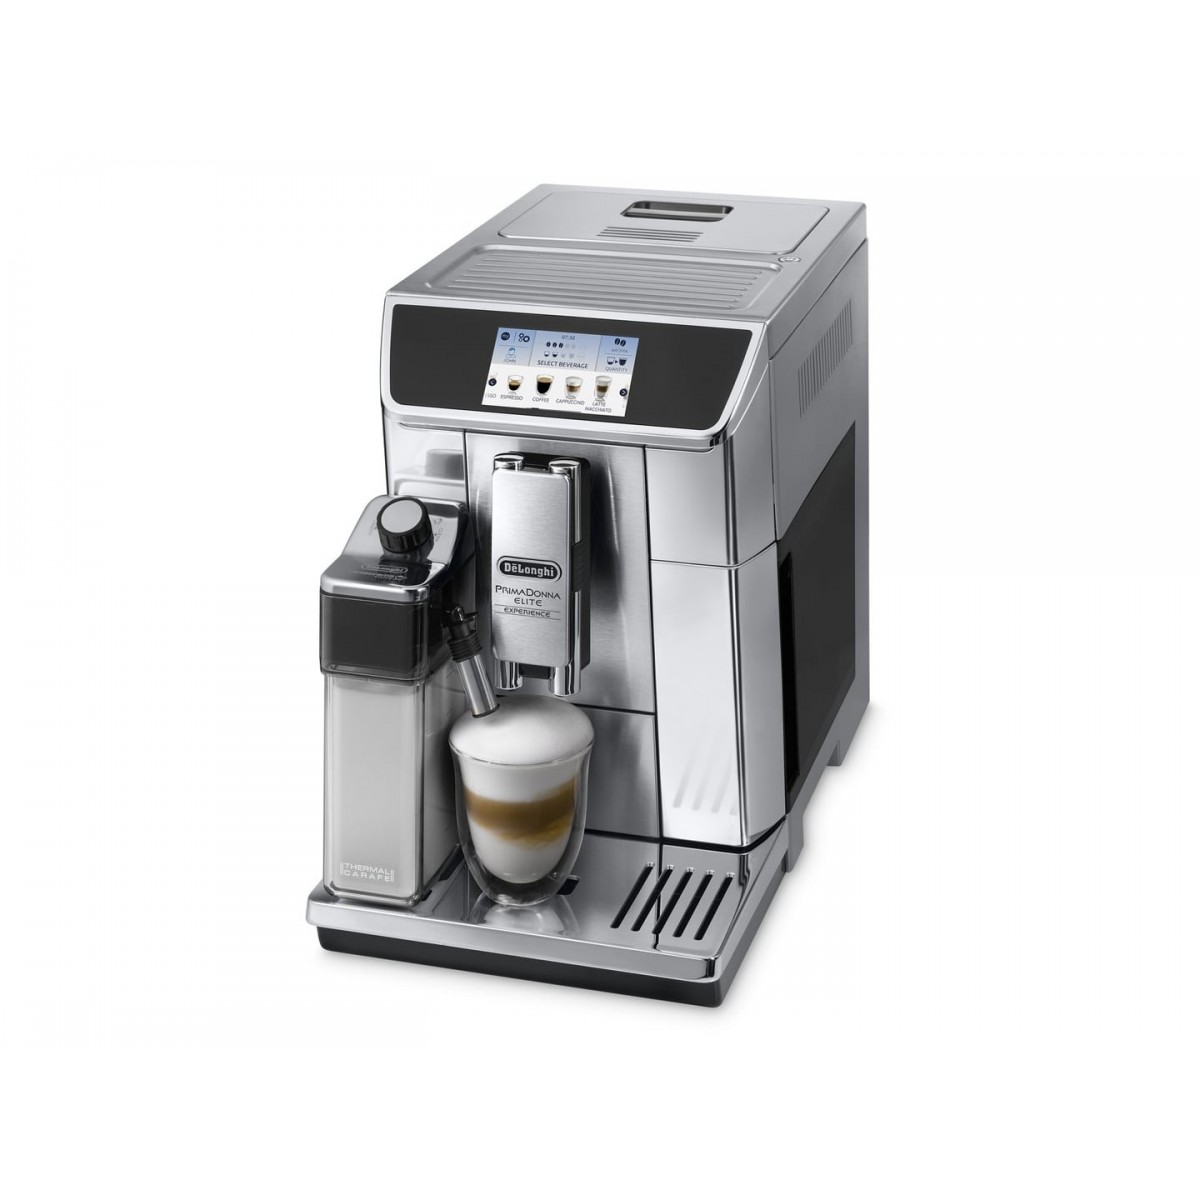 De Longhi PrimaDonna Elite Experience - Combi coffee maker - Coffee beans,Ground coffee - Built-in grinder - 1450 W - Black,Meta